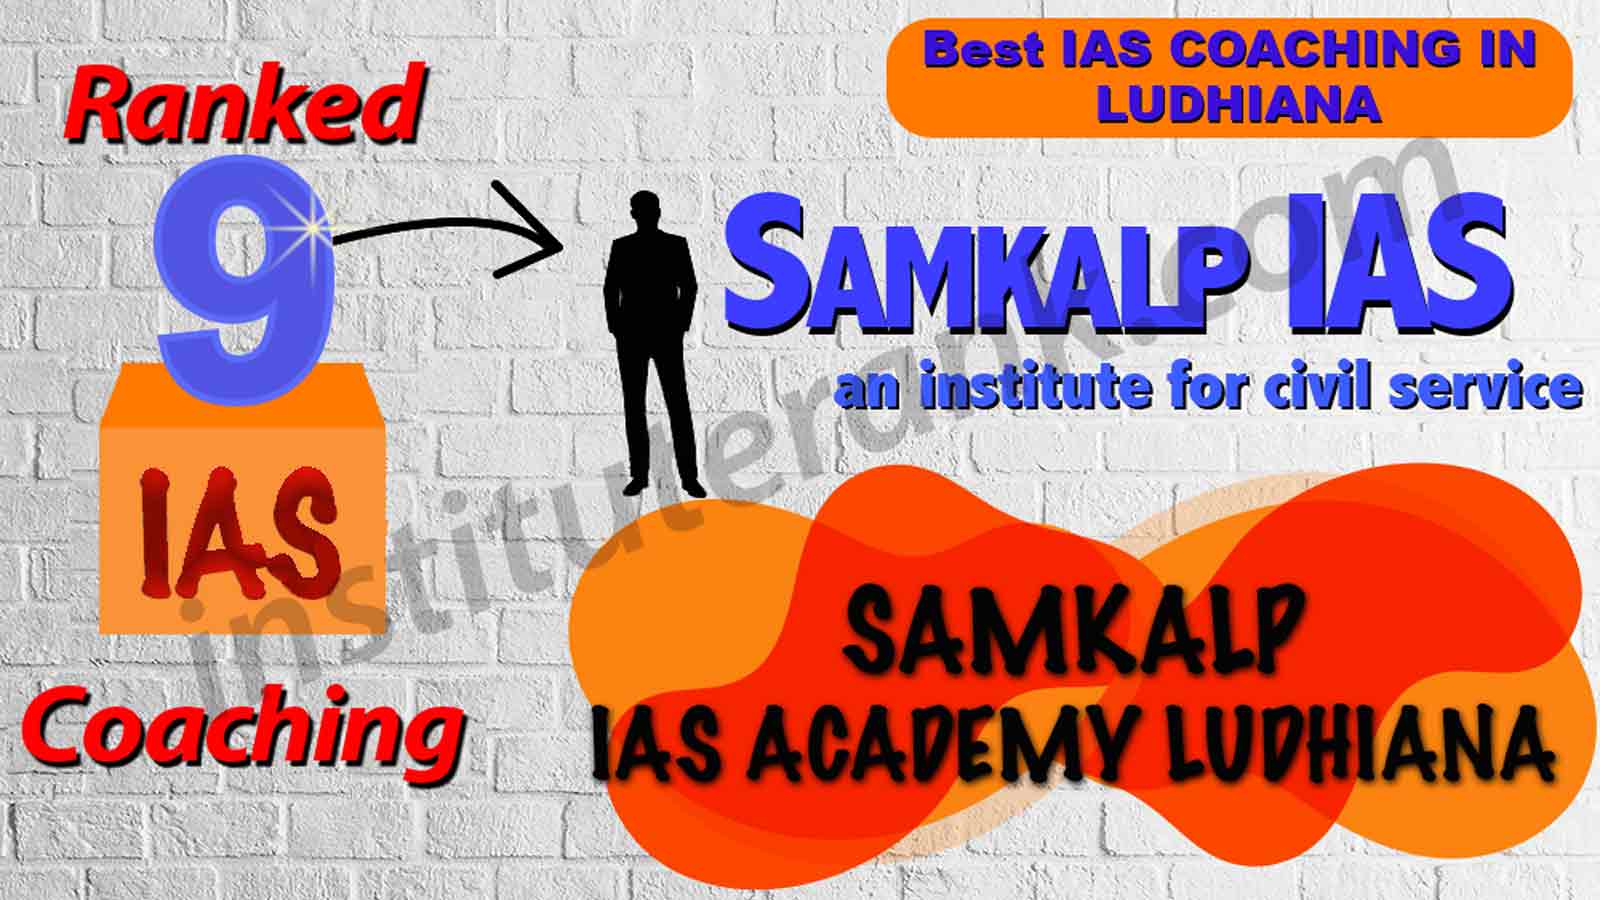 Best IAS Coaching in Ludhiana 